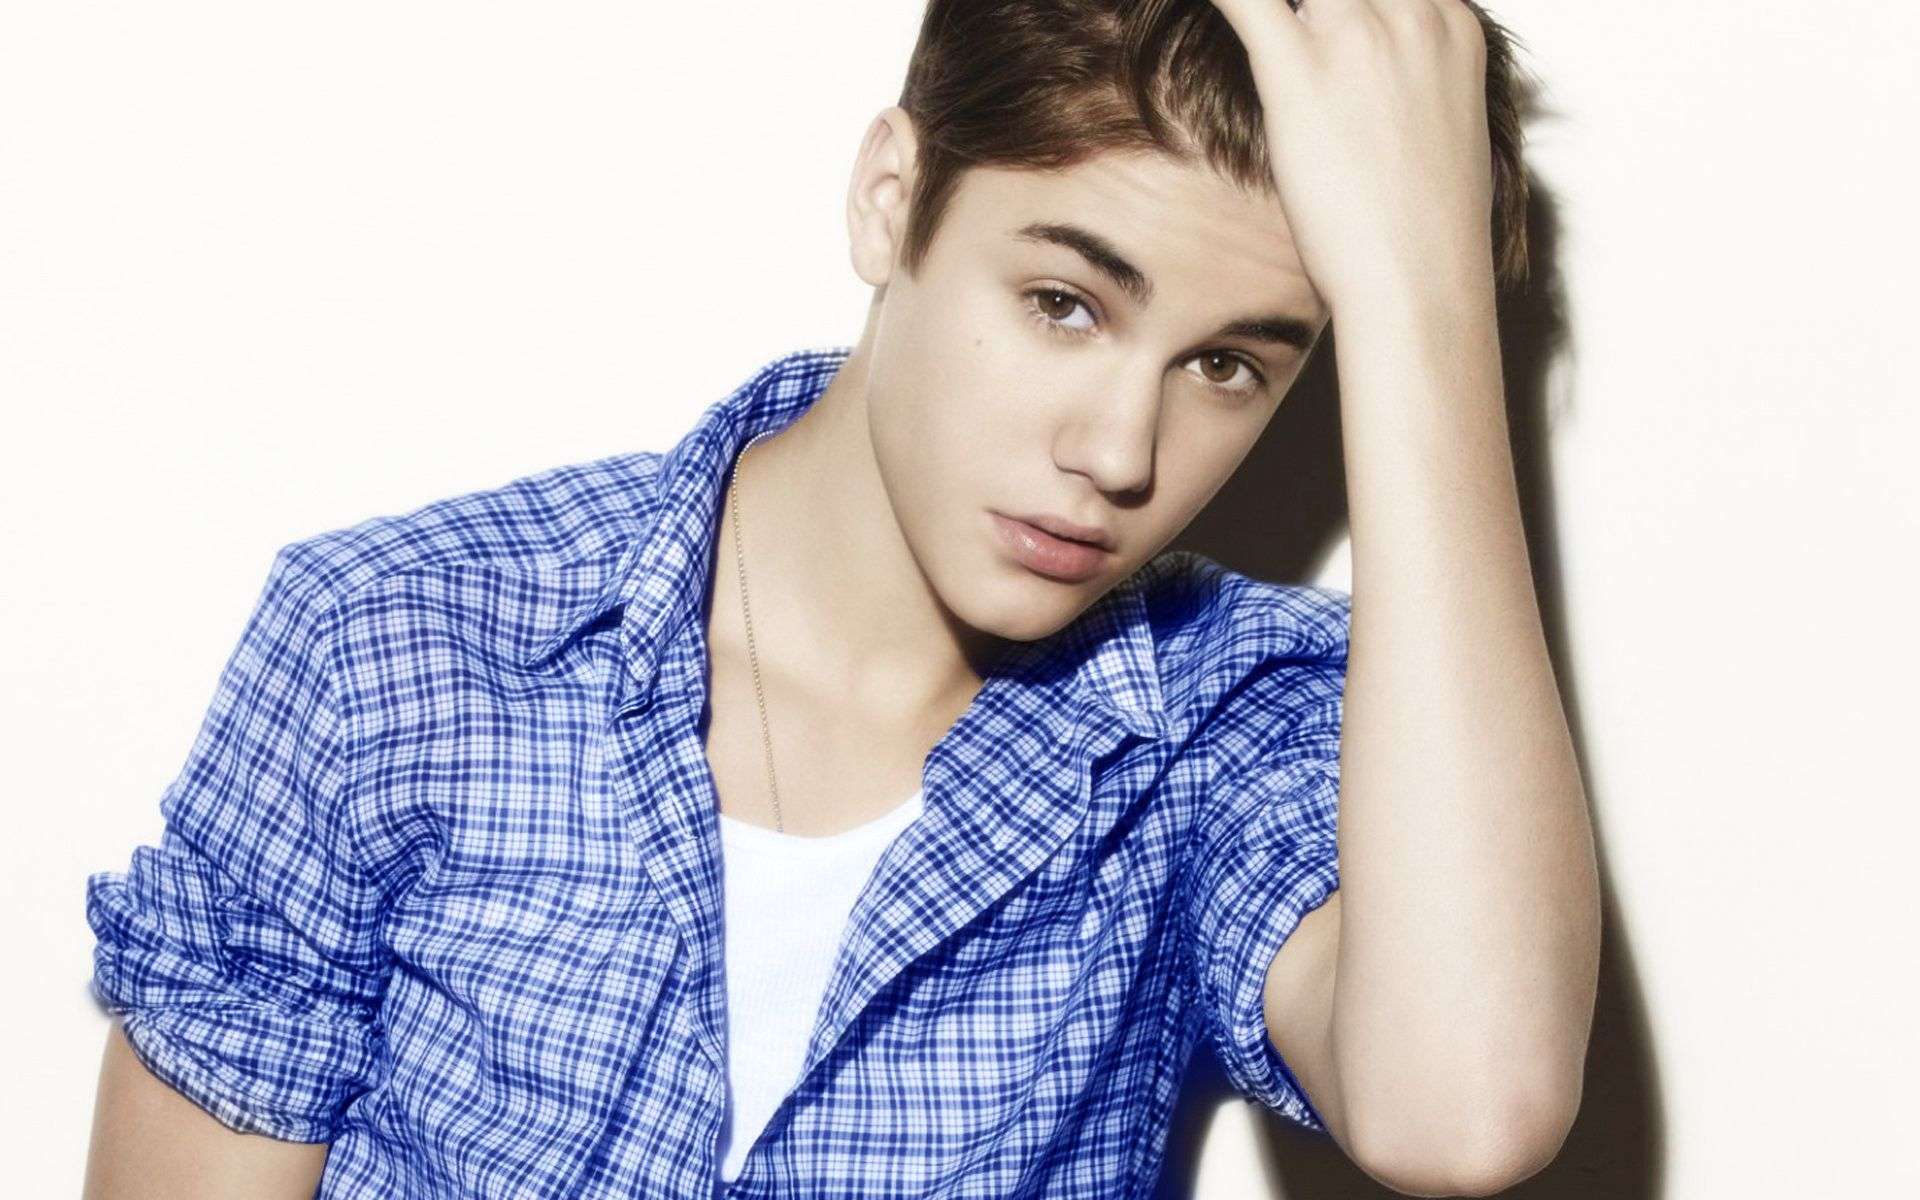 Justin Bieber Wallpaper & Justin Bieber Picture Best Collection